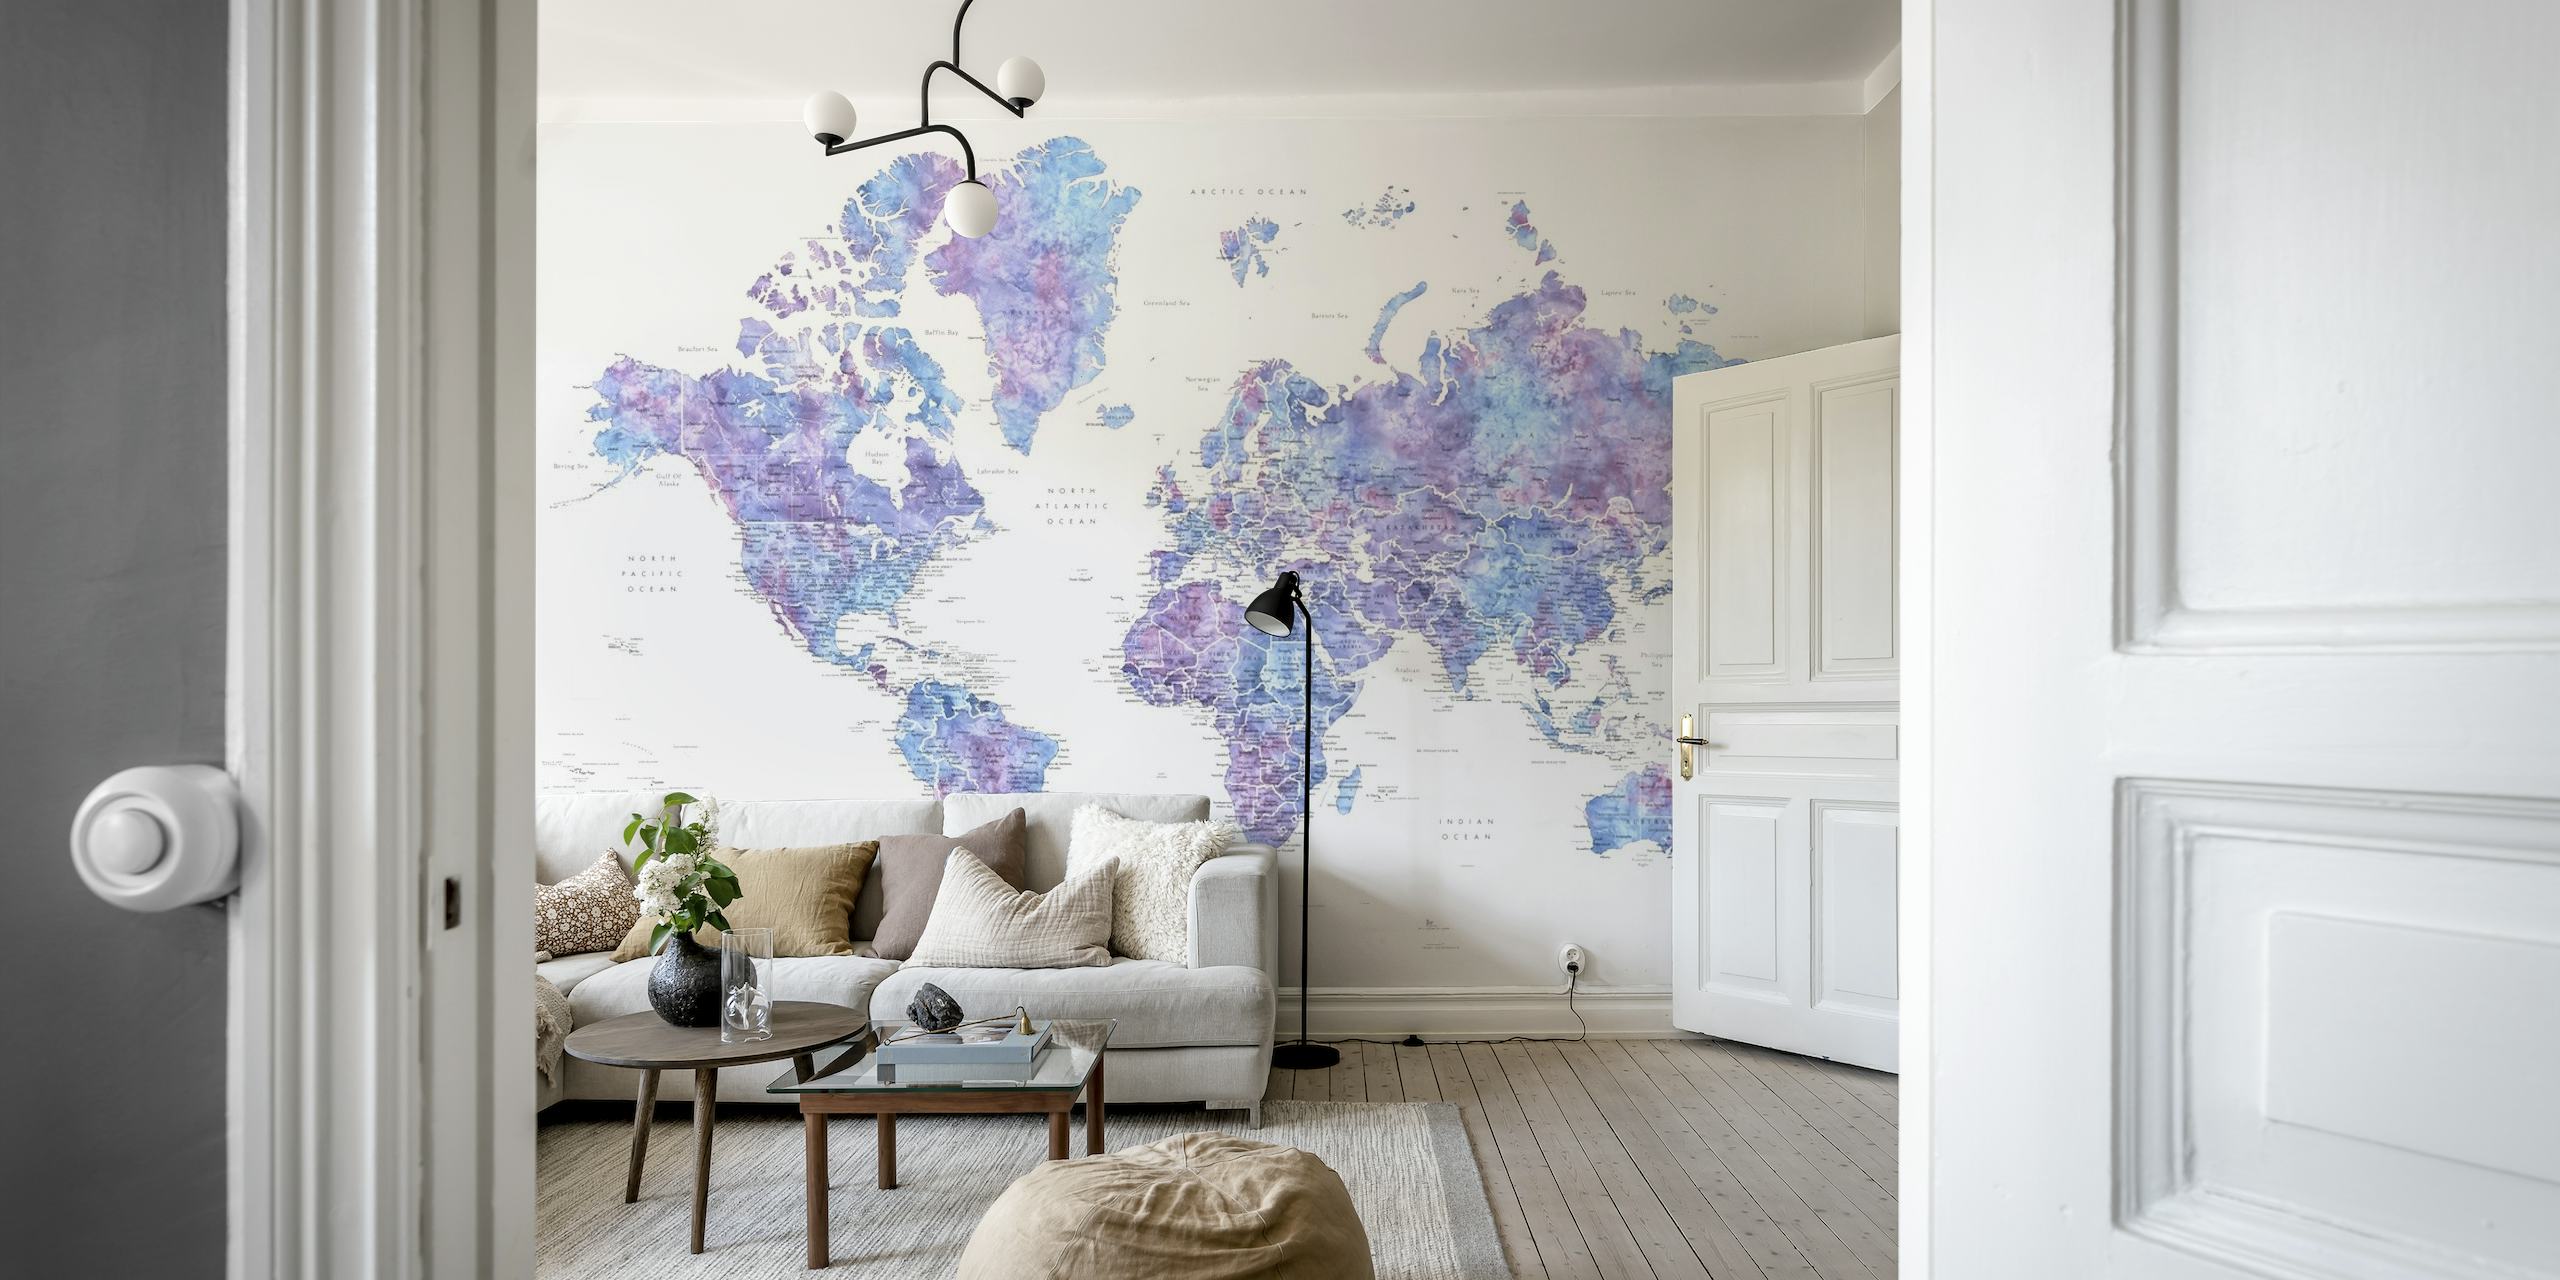 Detailed world map Raul papel pintado